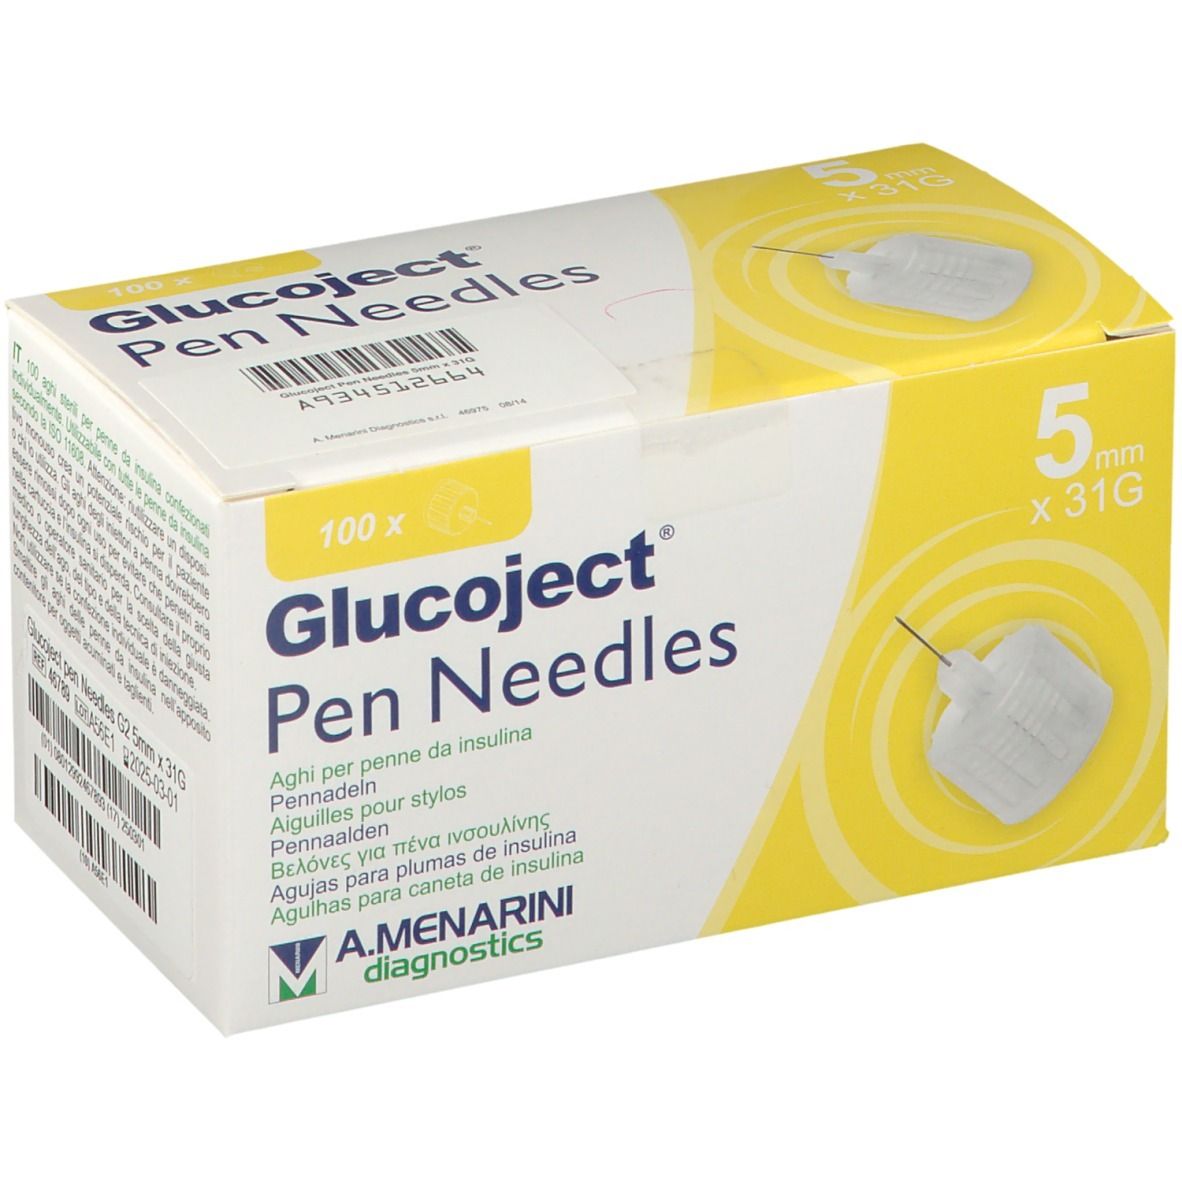 Image of Glucojet Pen Needles 5mm x 31G A.Menarini Diagnostics 100 Aghi